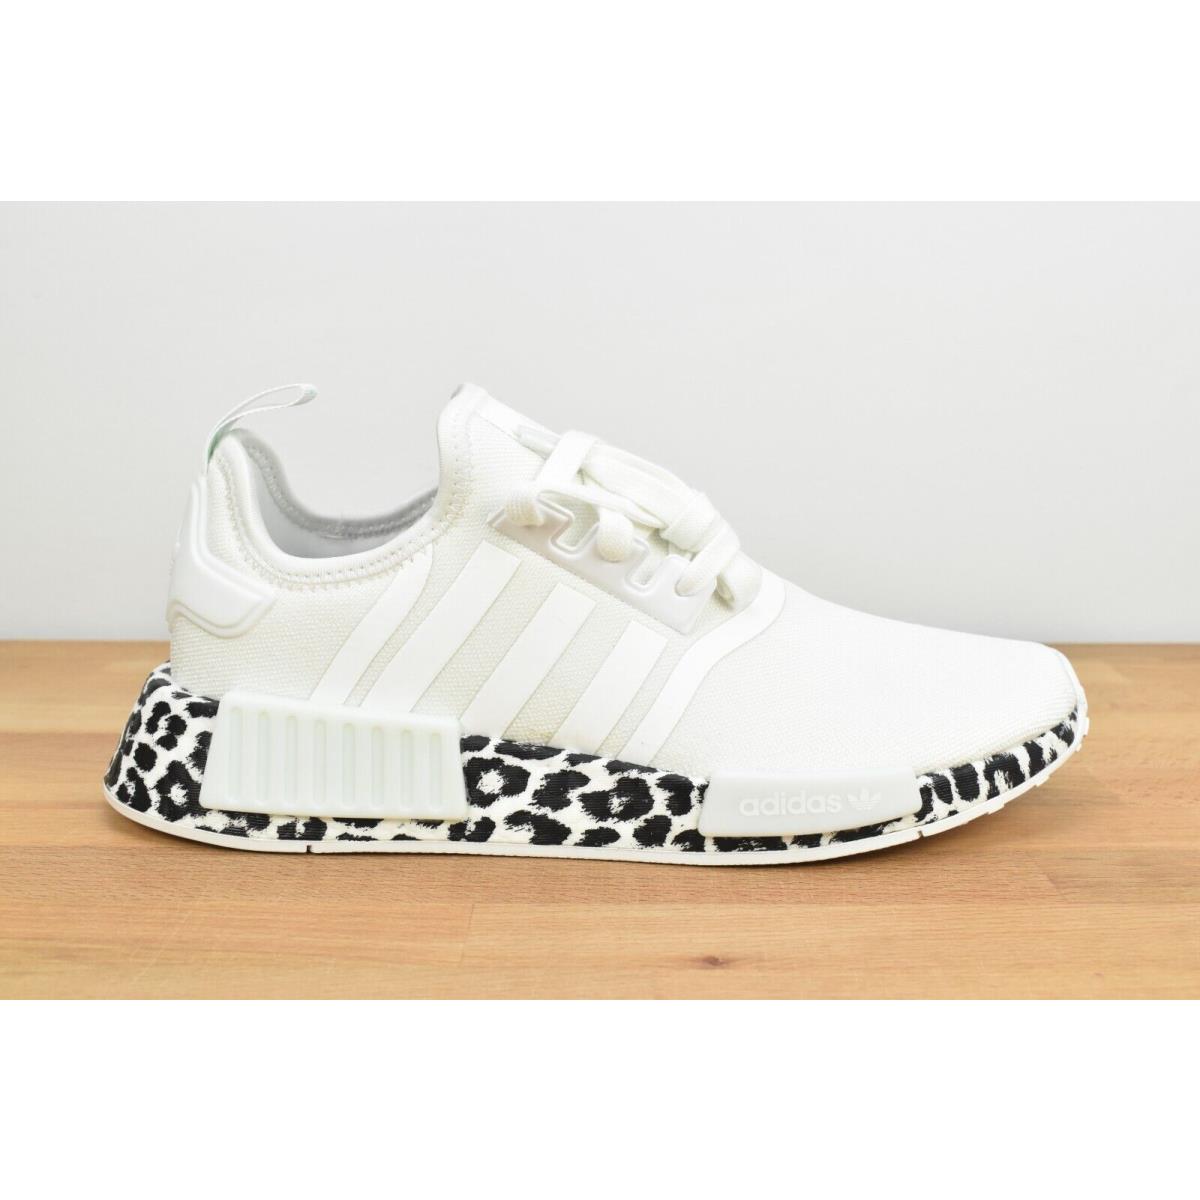 Adidas Nmd R1 Womens Running Shoes White Black Leopard Print GZ1623